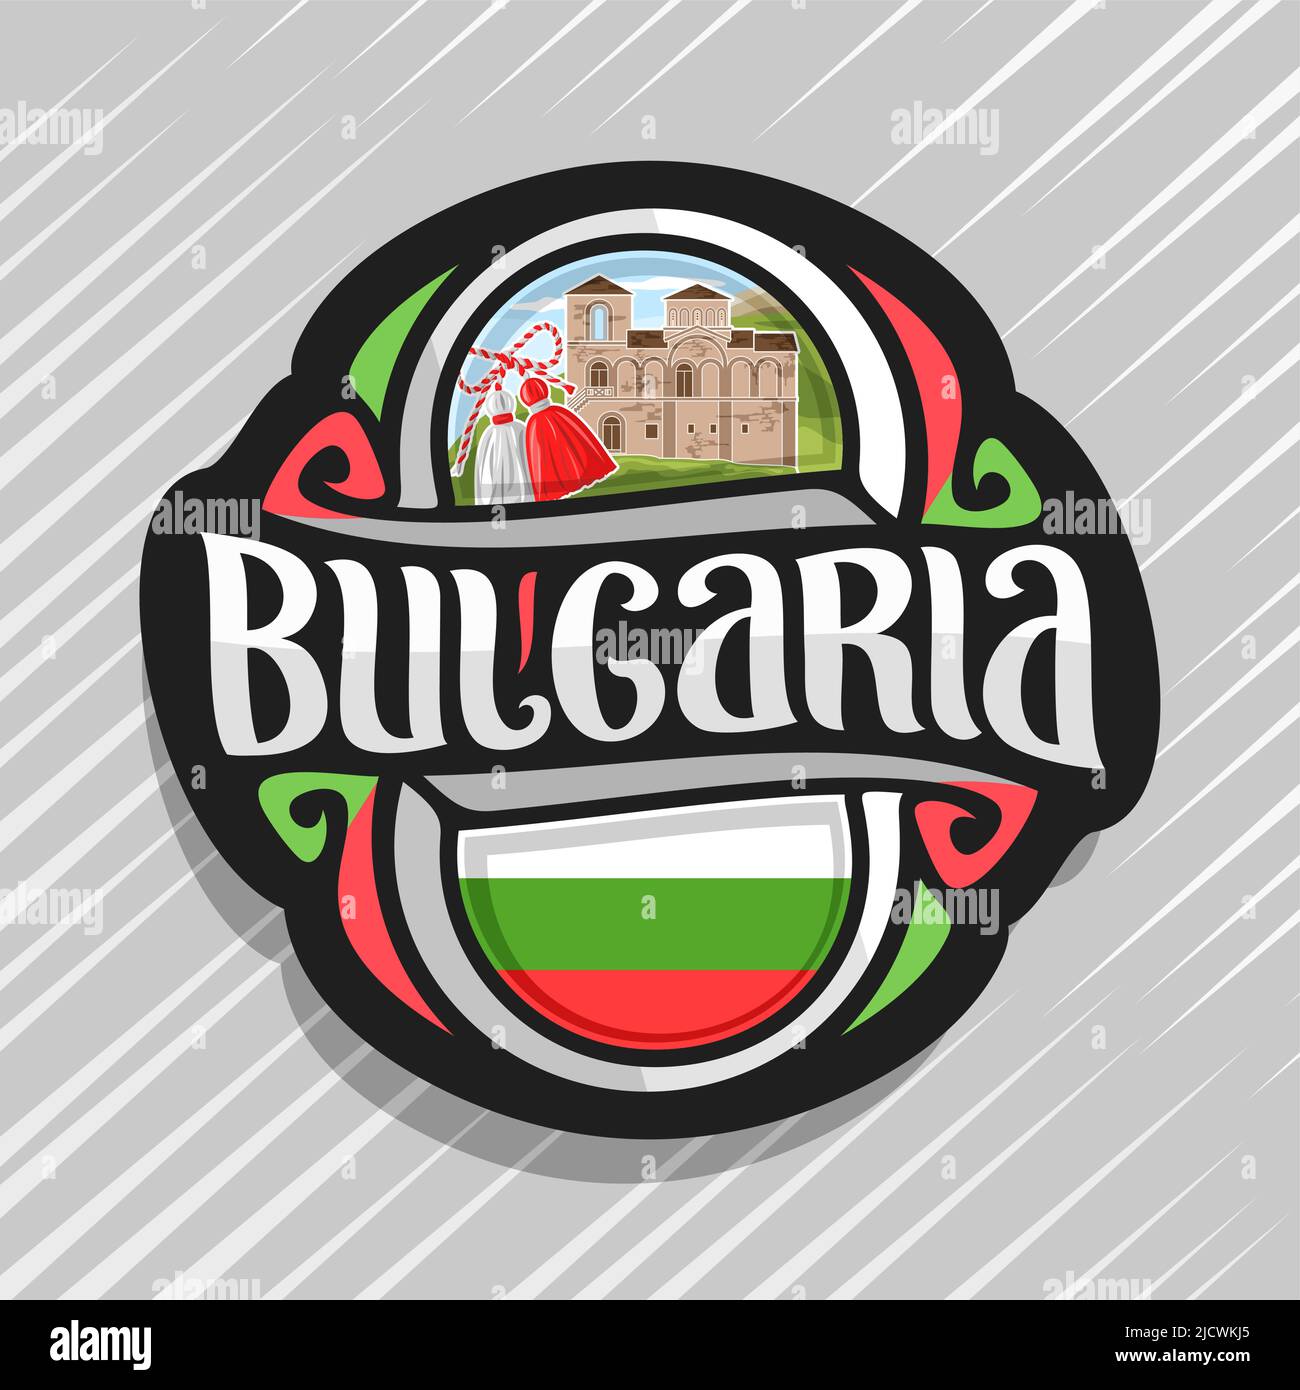 Vector logo for Bulgaria country, fridge magnet with bulgarian flag, original brush typeface for word Bulgaria, bulgarian symbol - red and white marte Stock Vector